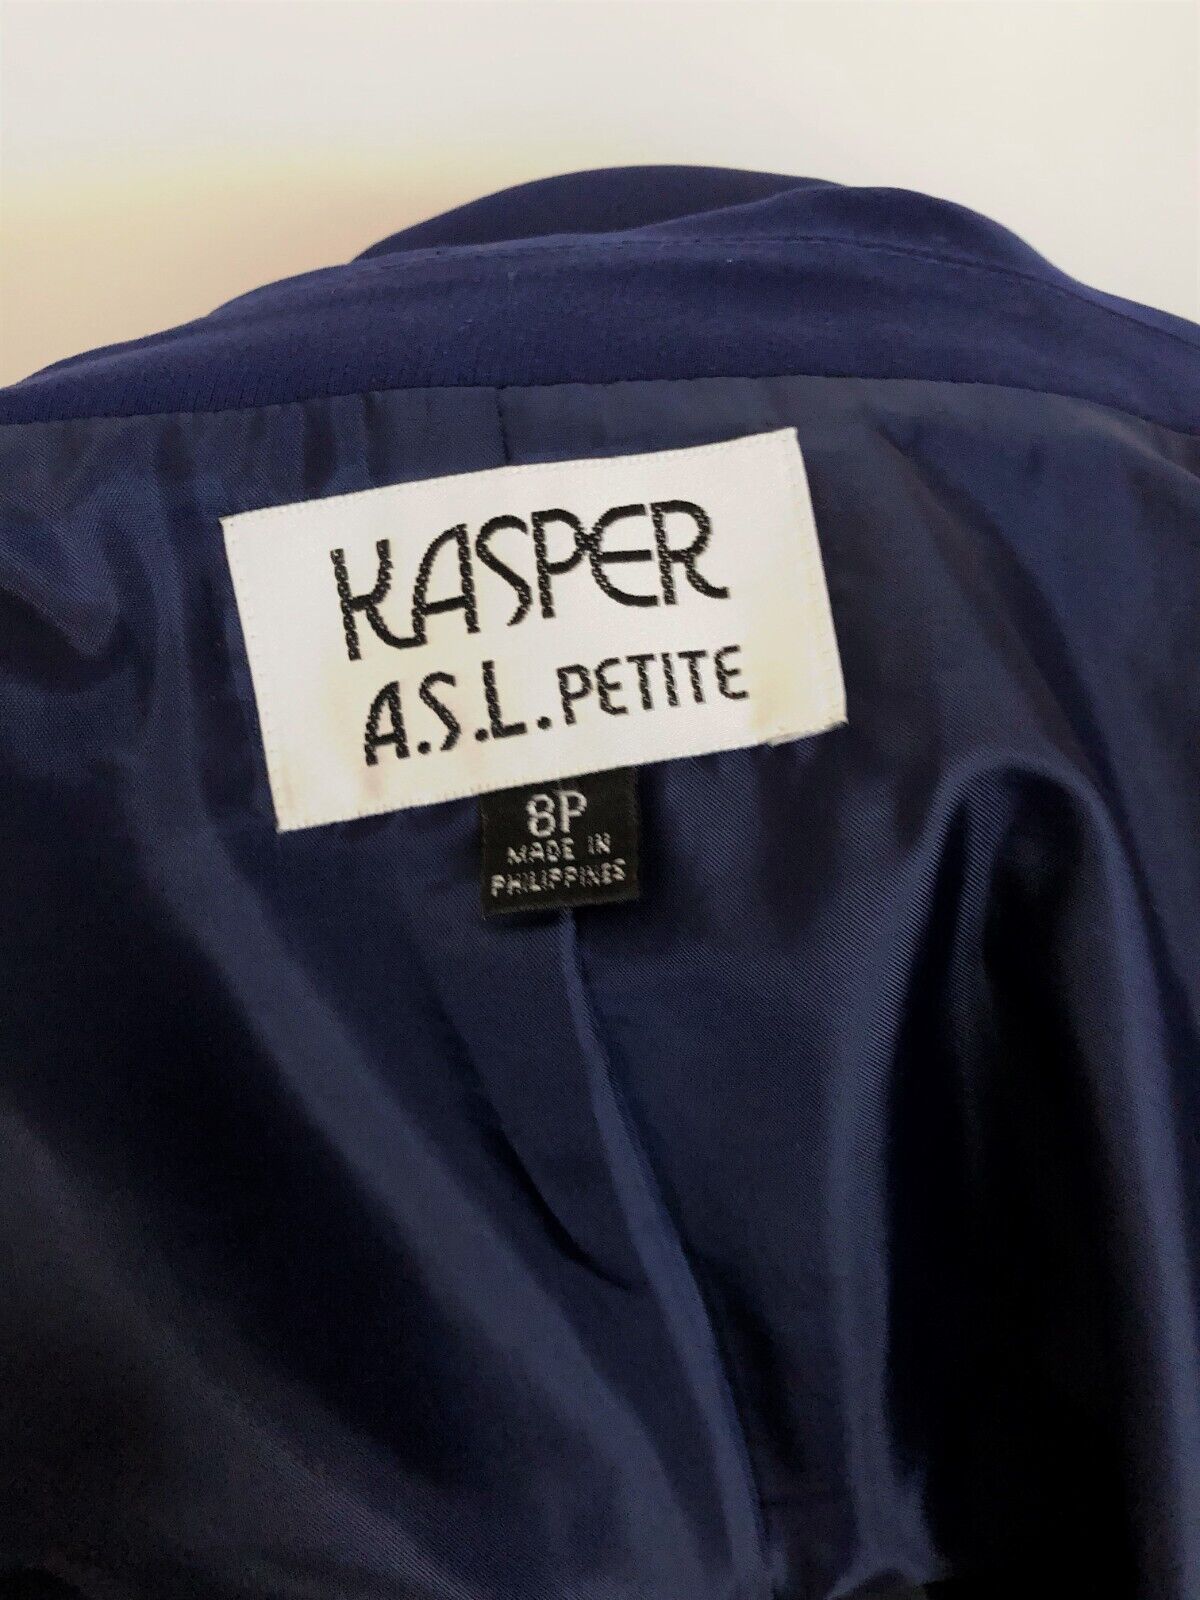 KASPER ASL PETITE 2-PIECE PERIWINKLE BLUE SKIRT S… - image 5